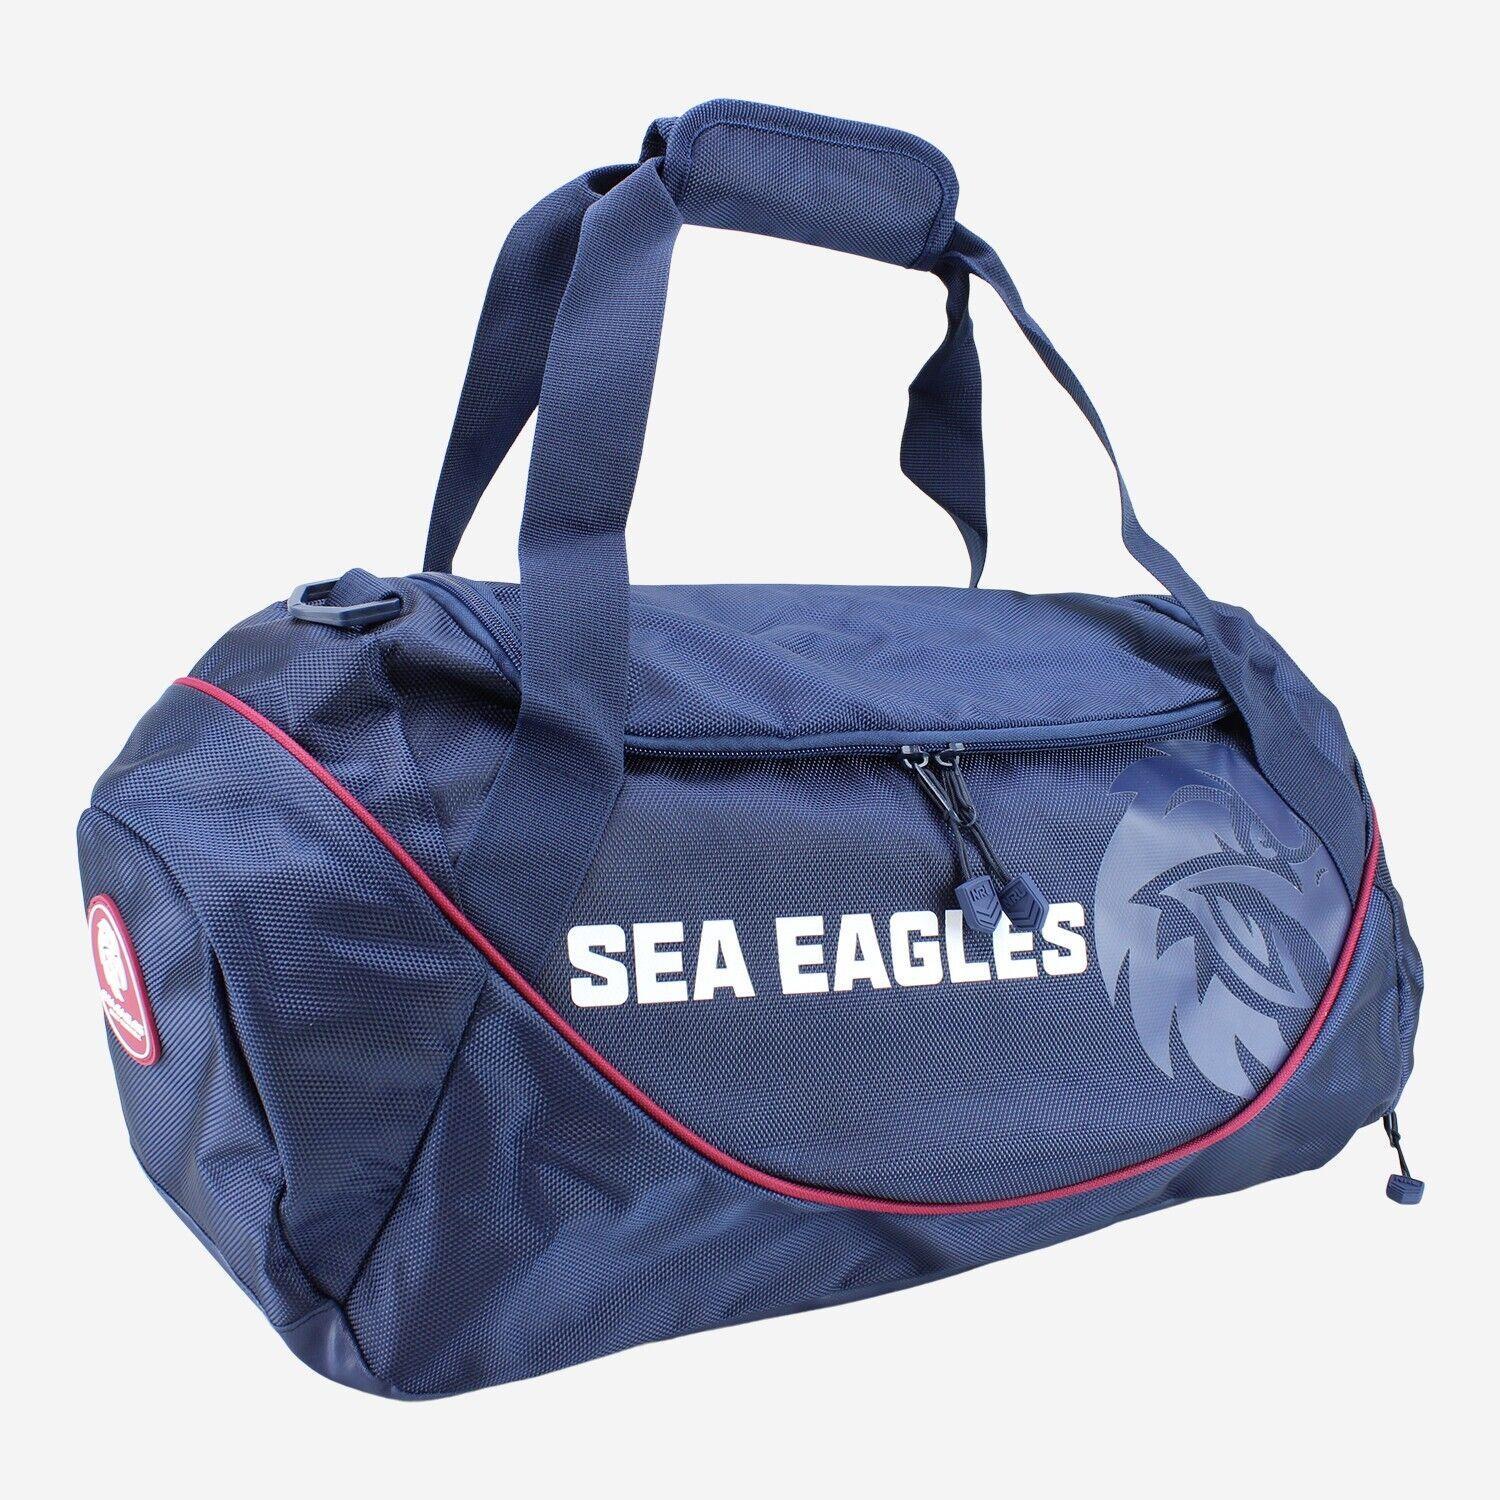 NRL Shadow Sports Bag - Manly Sea Eagles - Gym Travel Duffle Bag